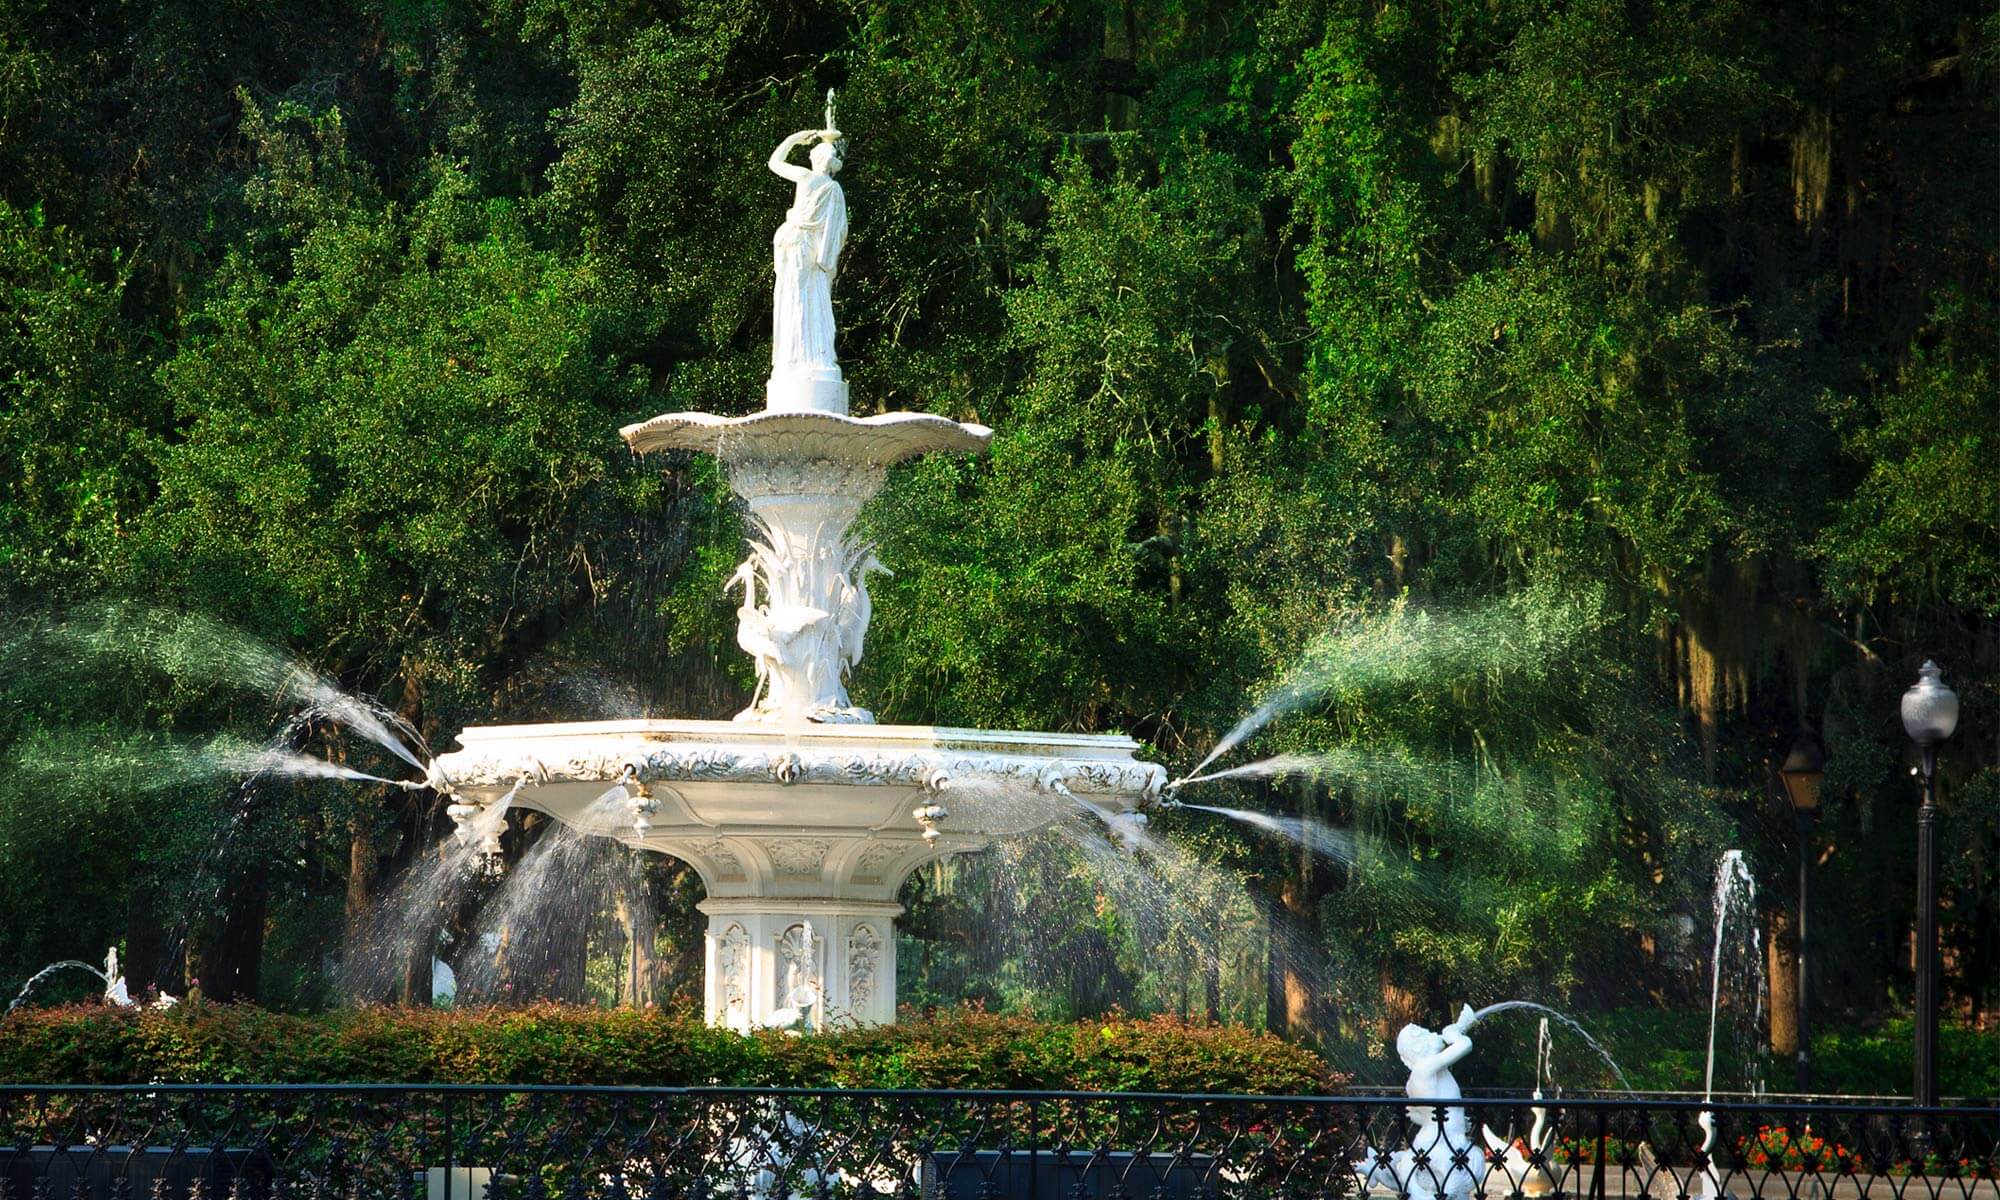 A very ornate fountain in Forsyth Park in Savannah, GA